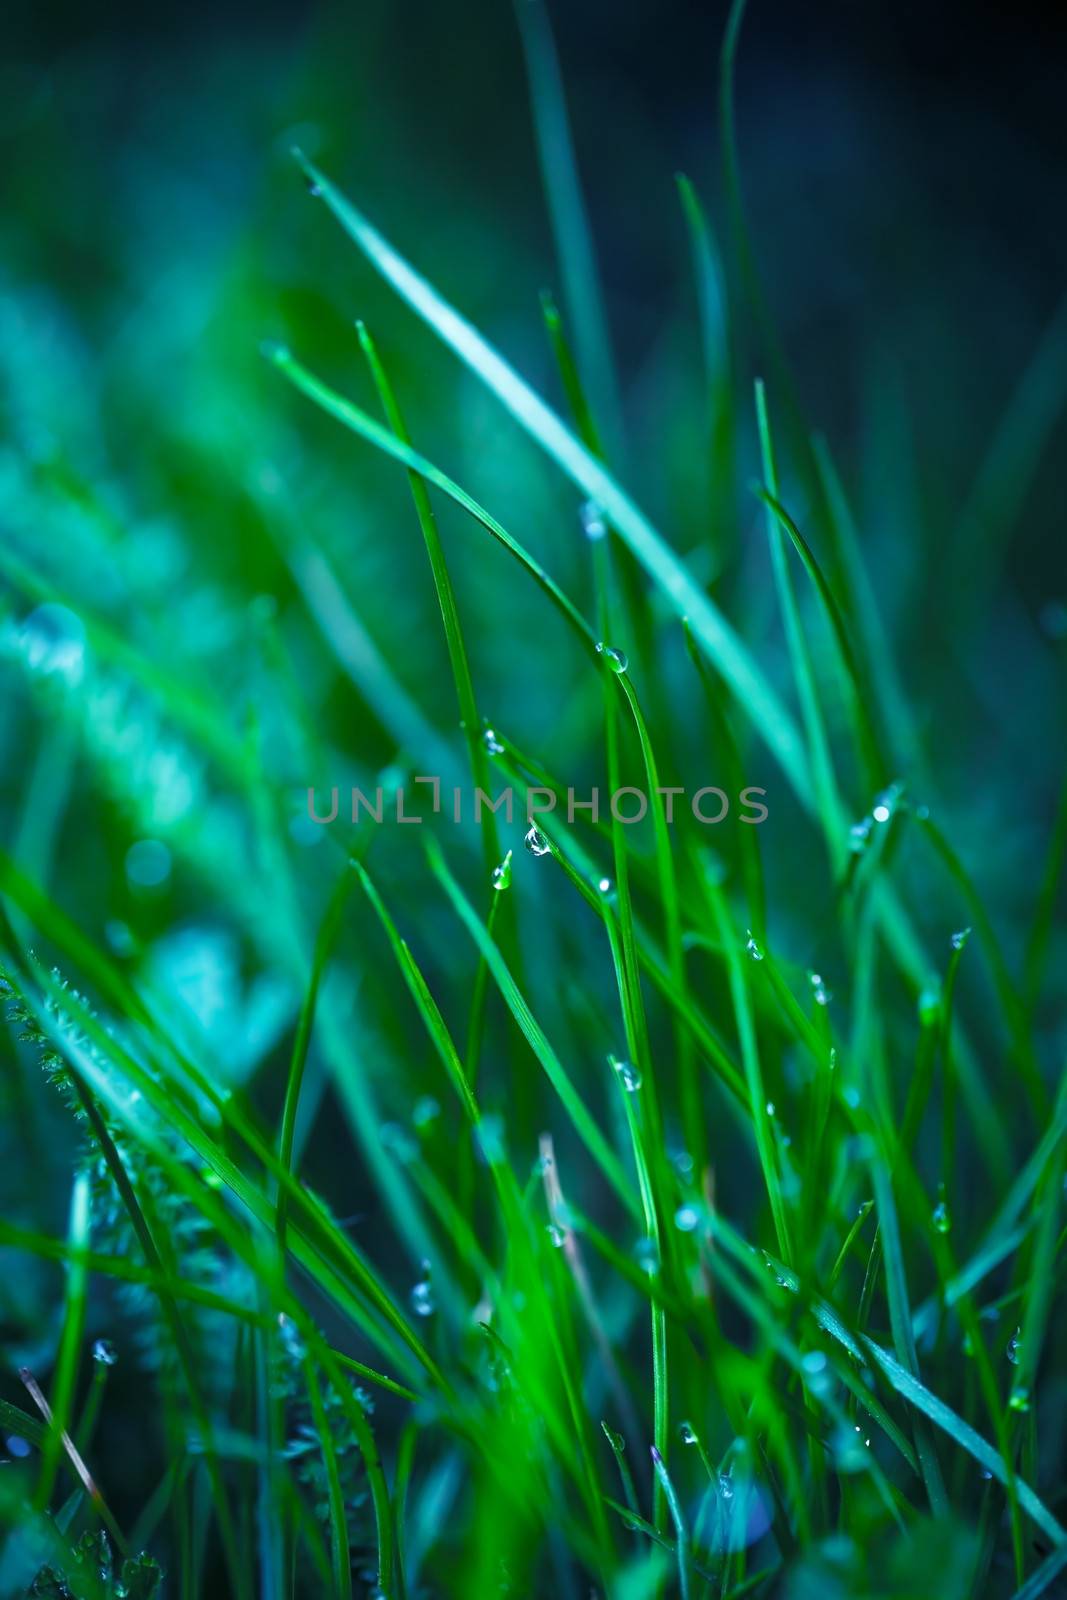 Grass by bozena_fulawka